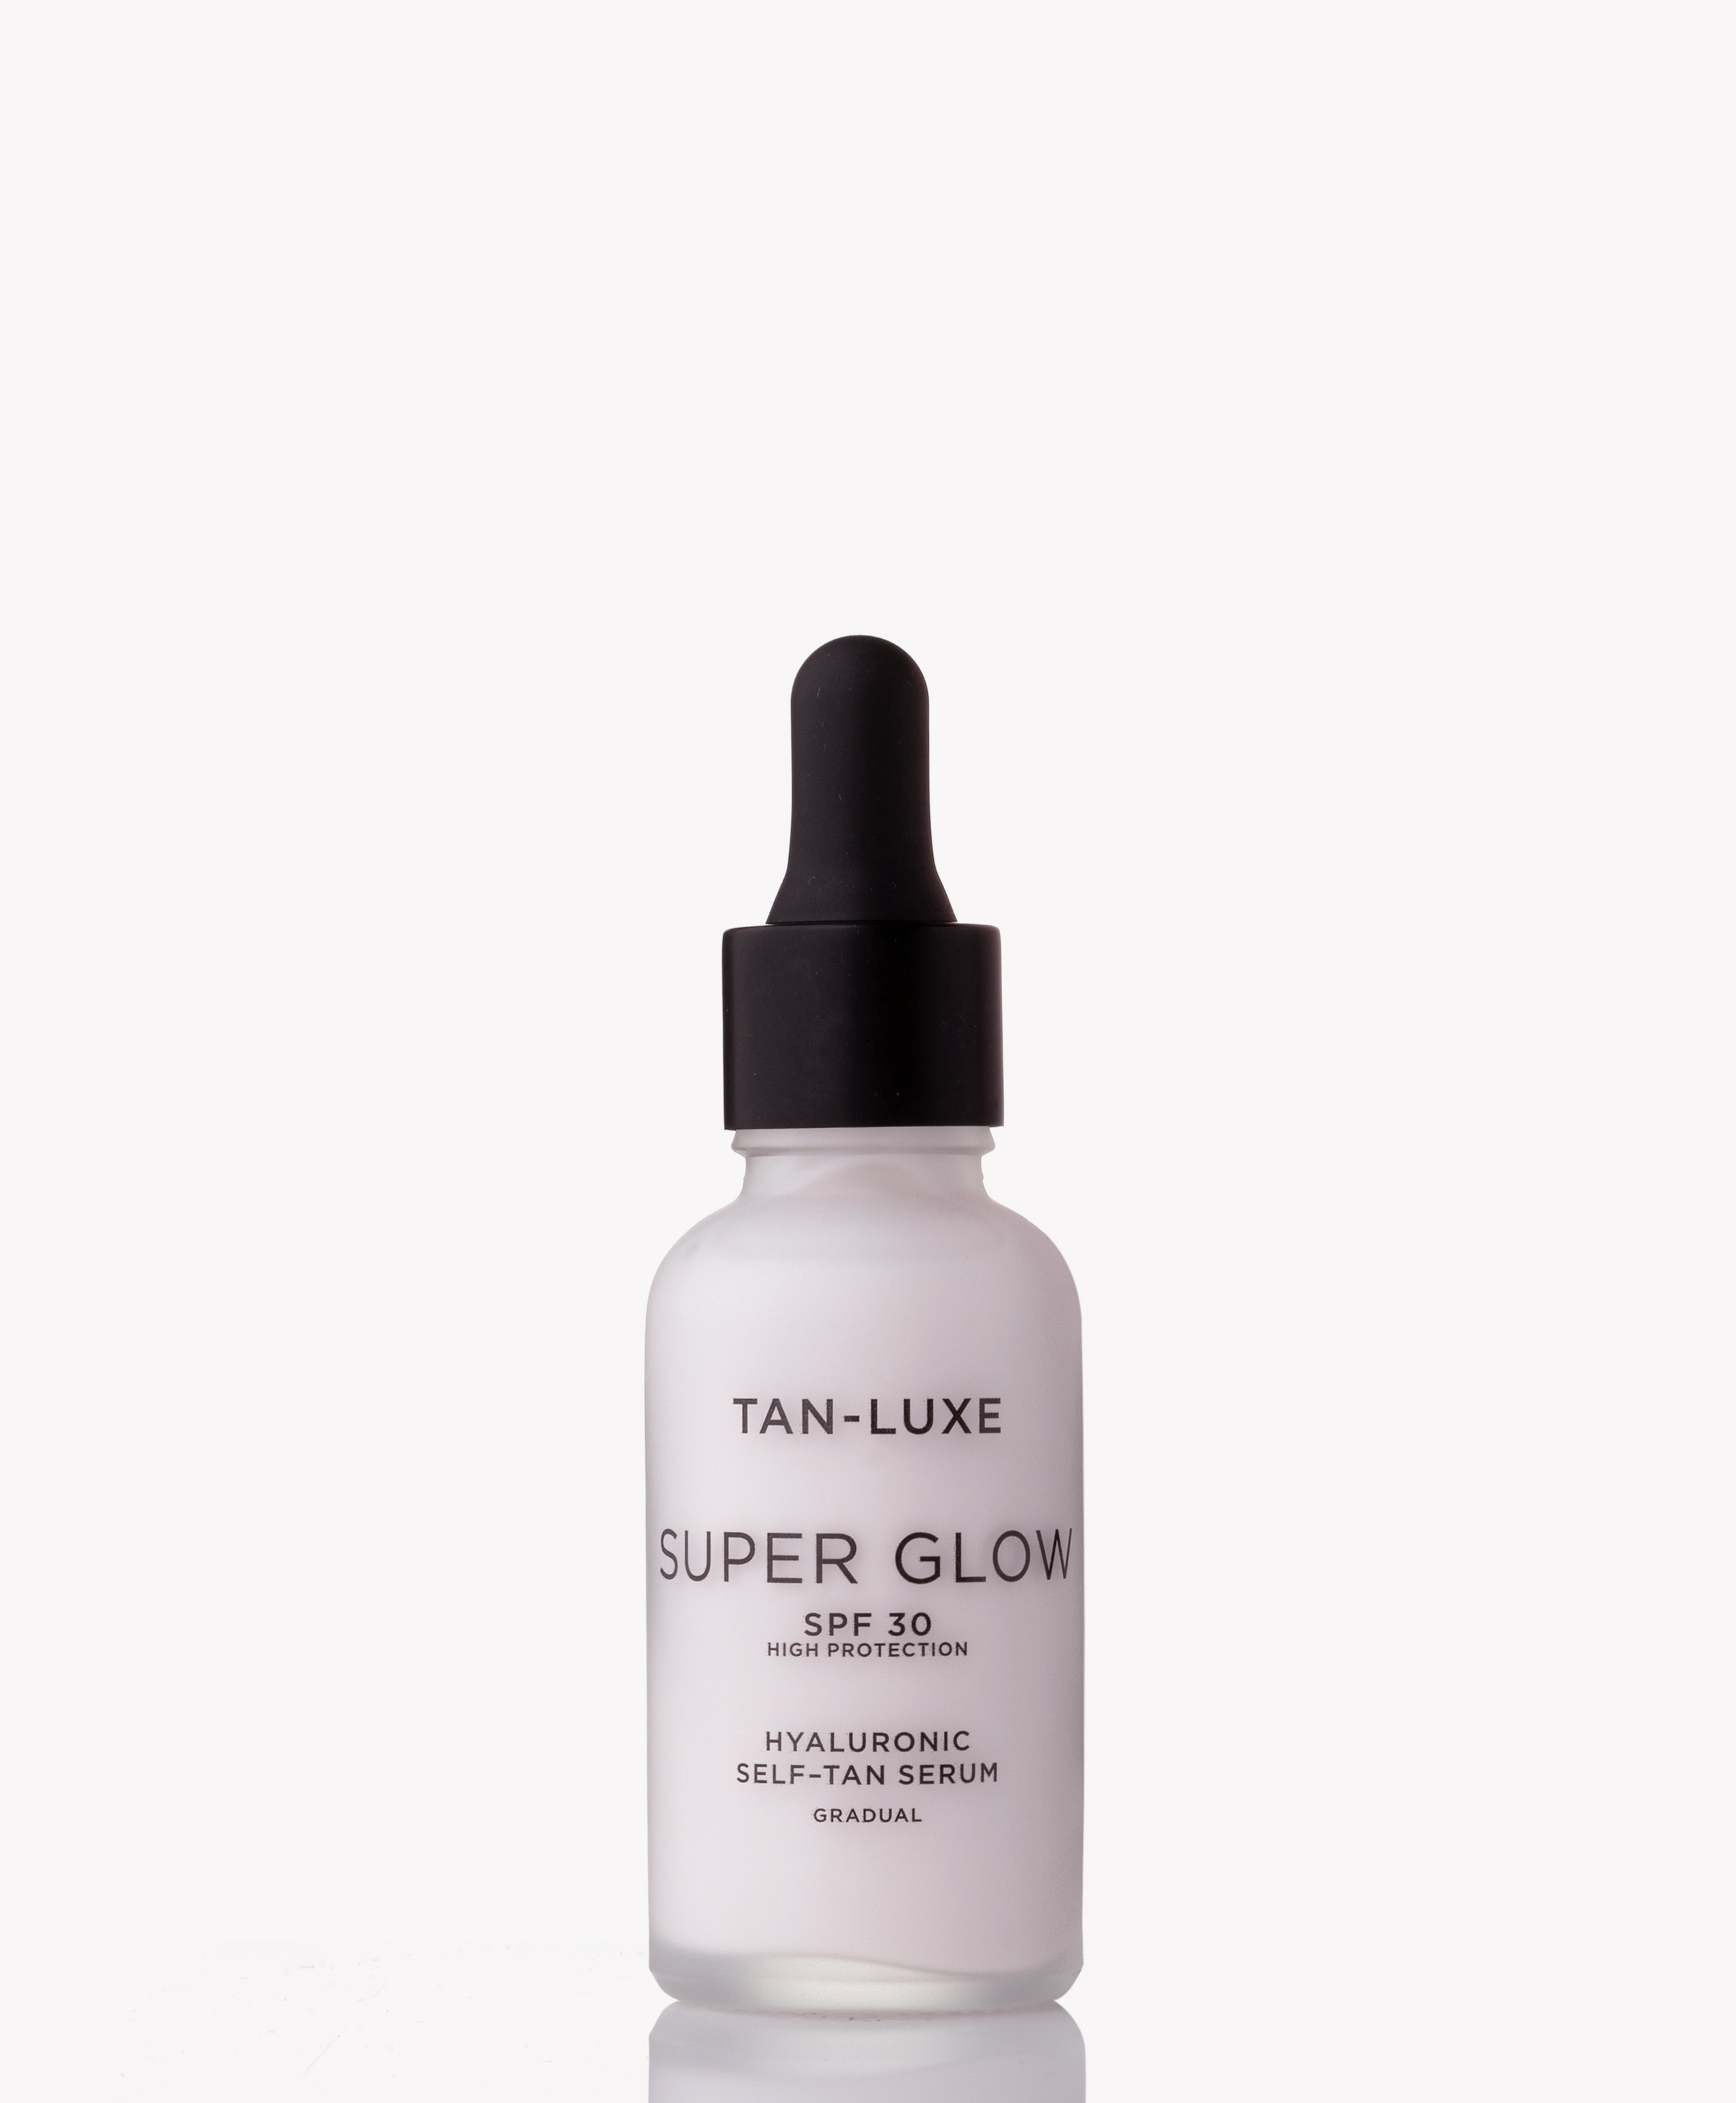 Super Glow Hyaluronic Self-tan Serum